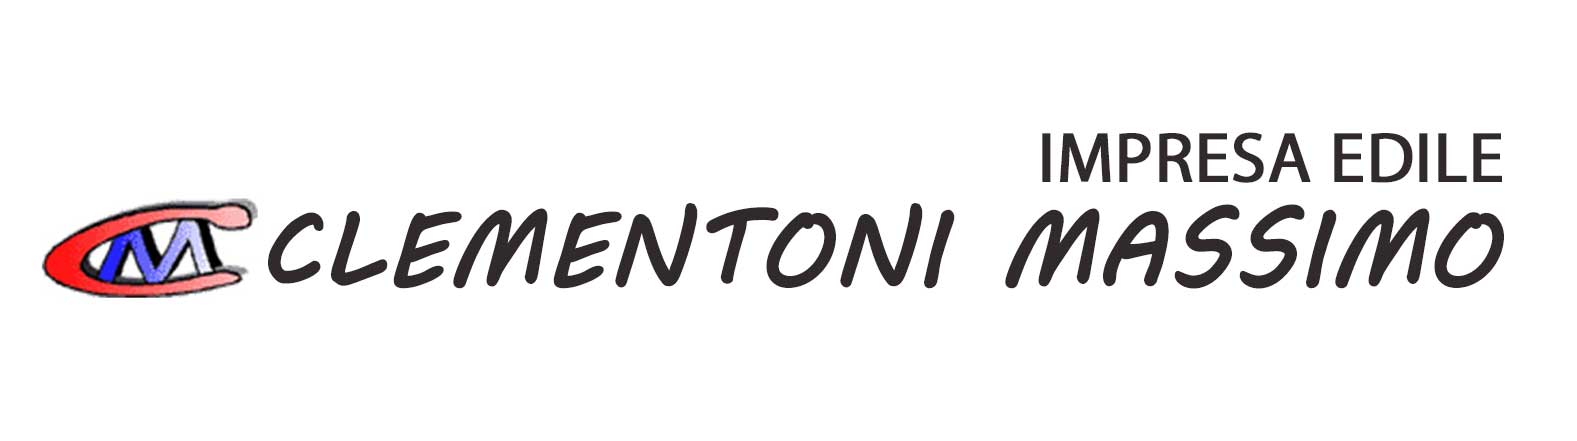 Clementoni Massimo Impresa Edile logo